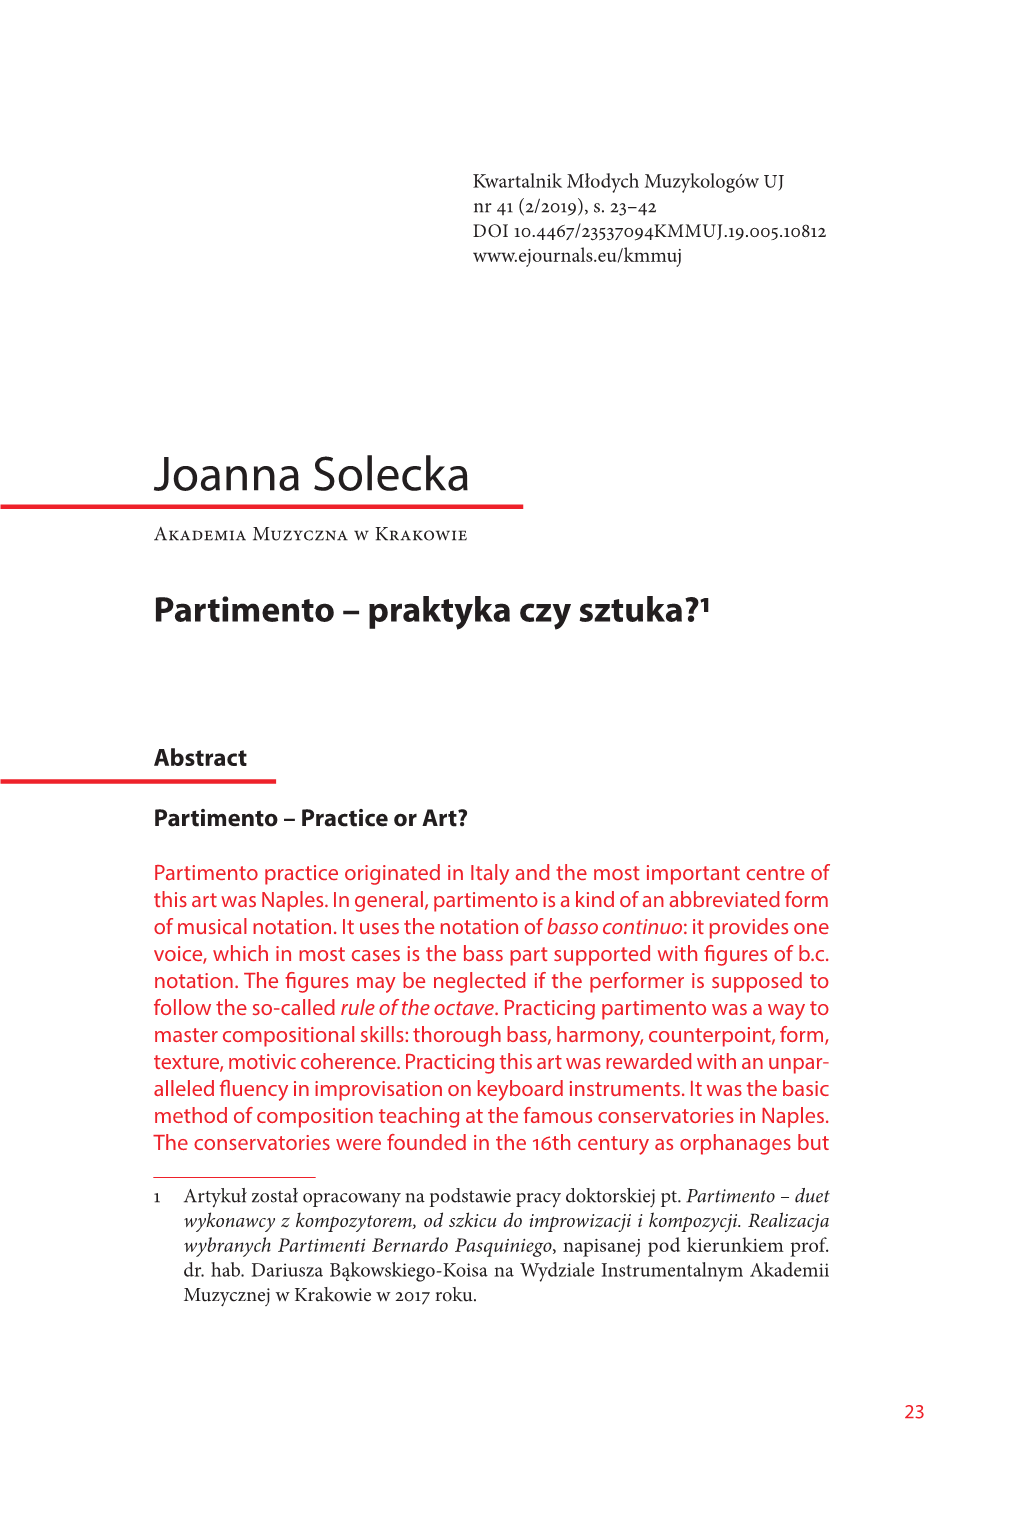 Joanna Solecka